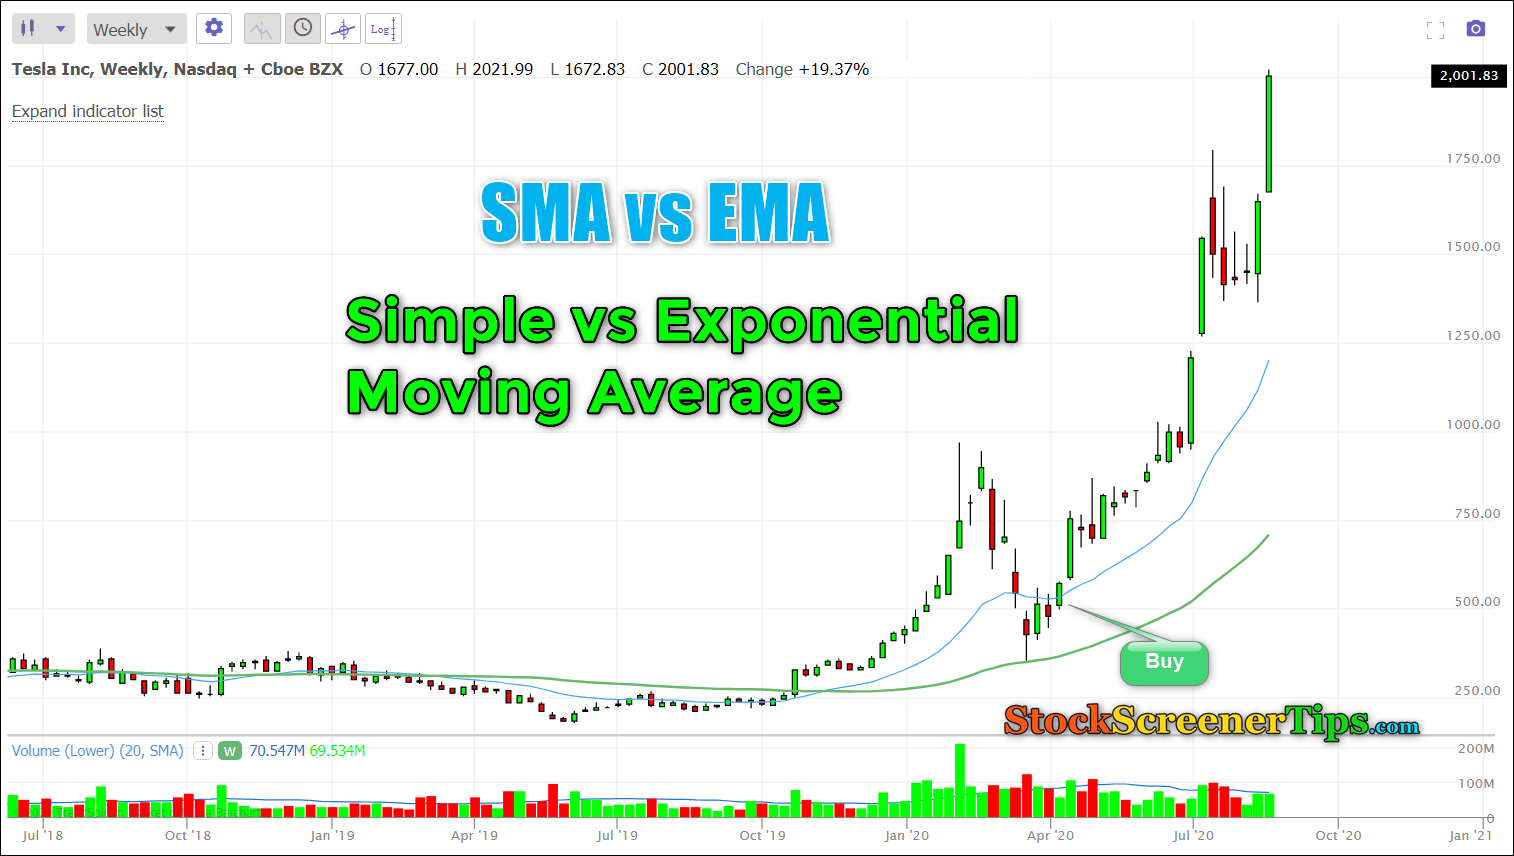 SMA vs EMA simple vs exponential moving average